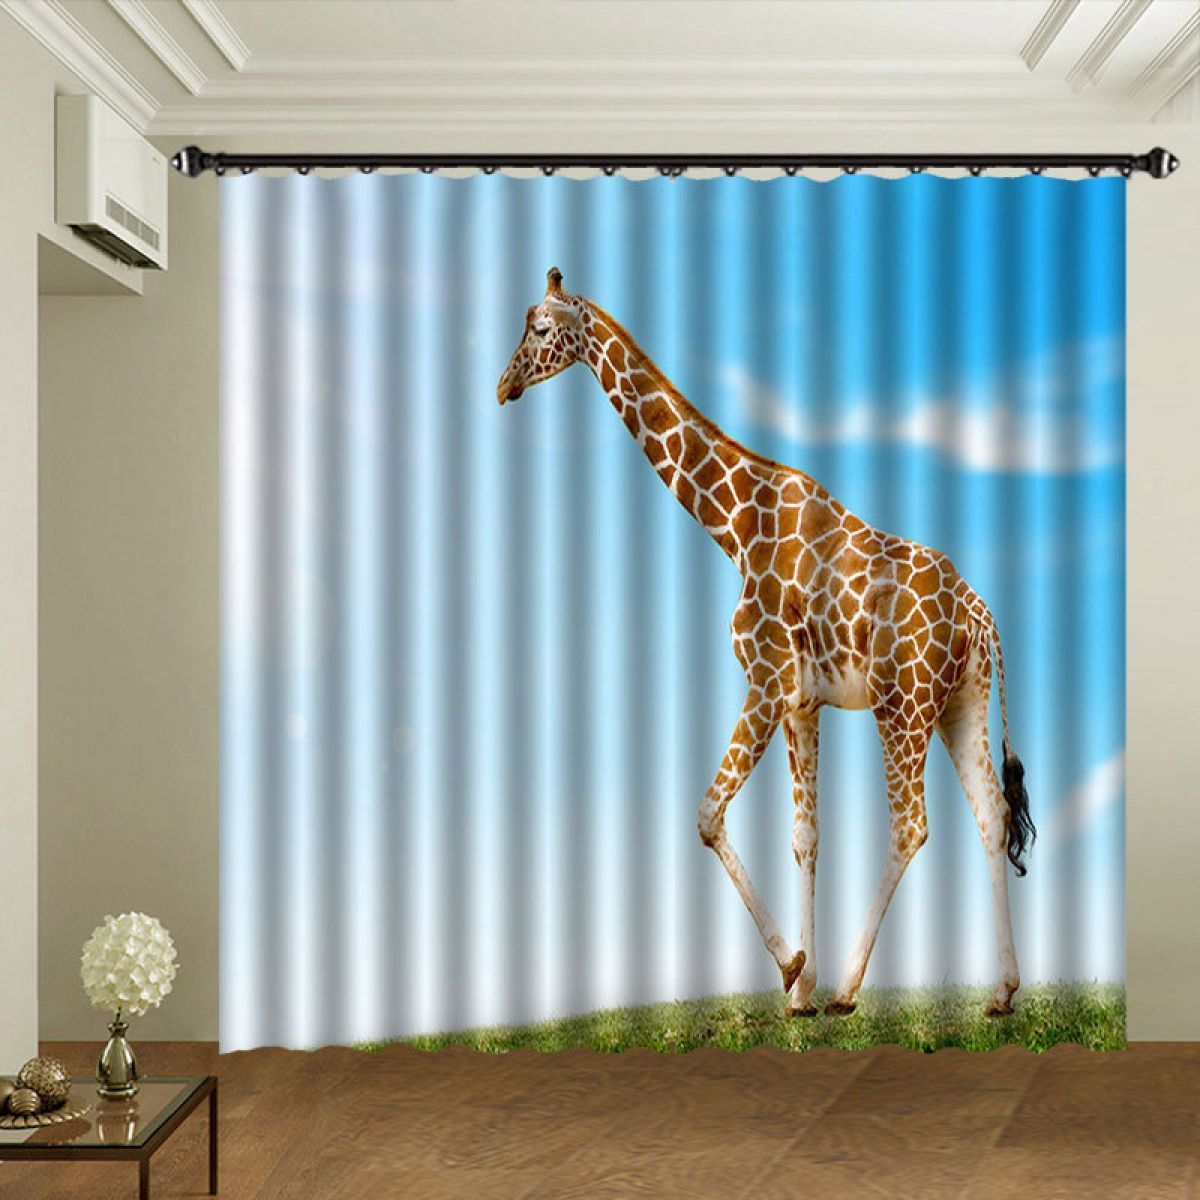 Running Giraffe Blue Sky Printed Window Curtain Home Decor